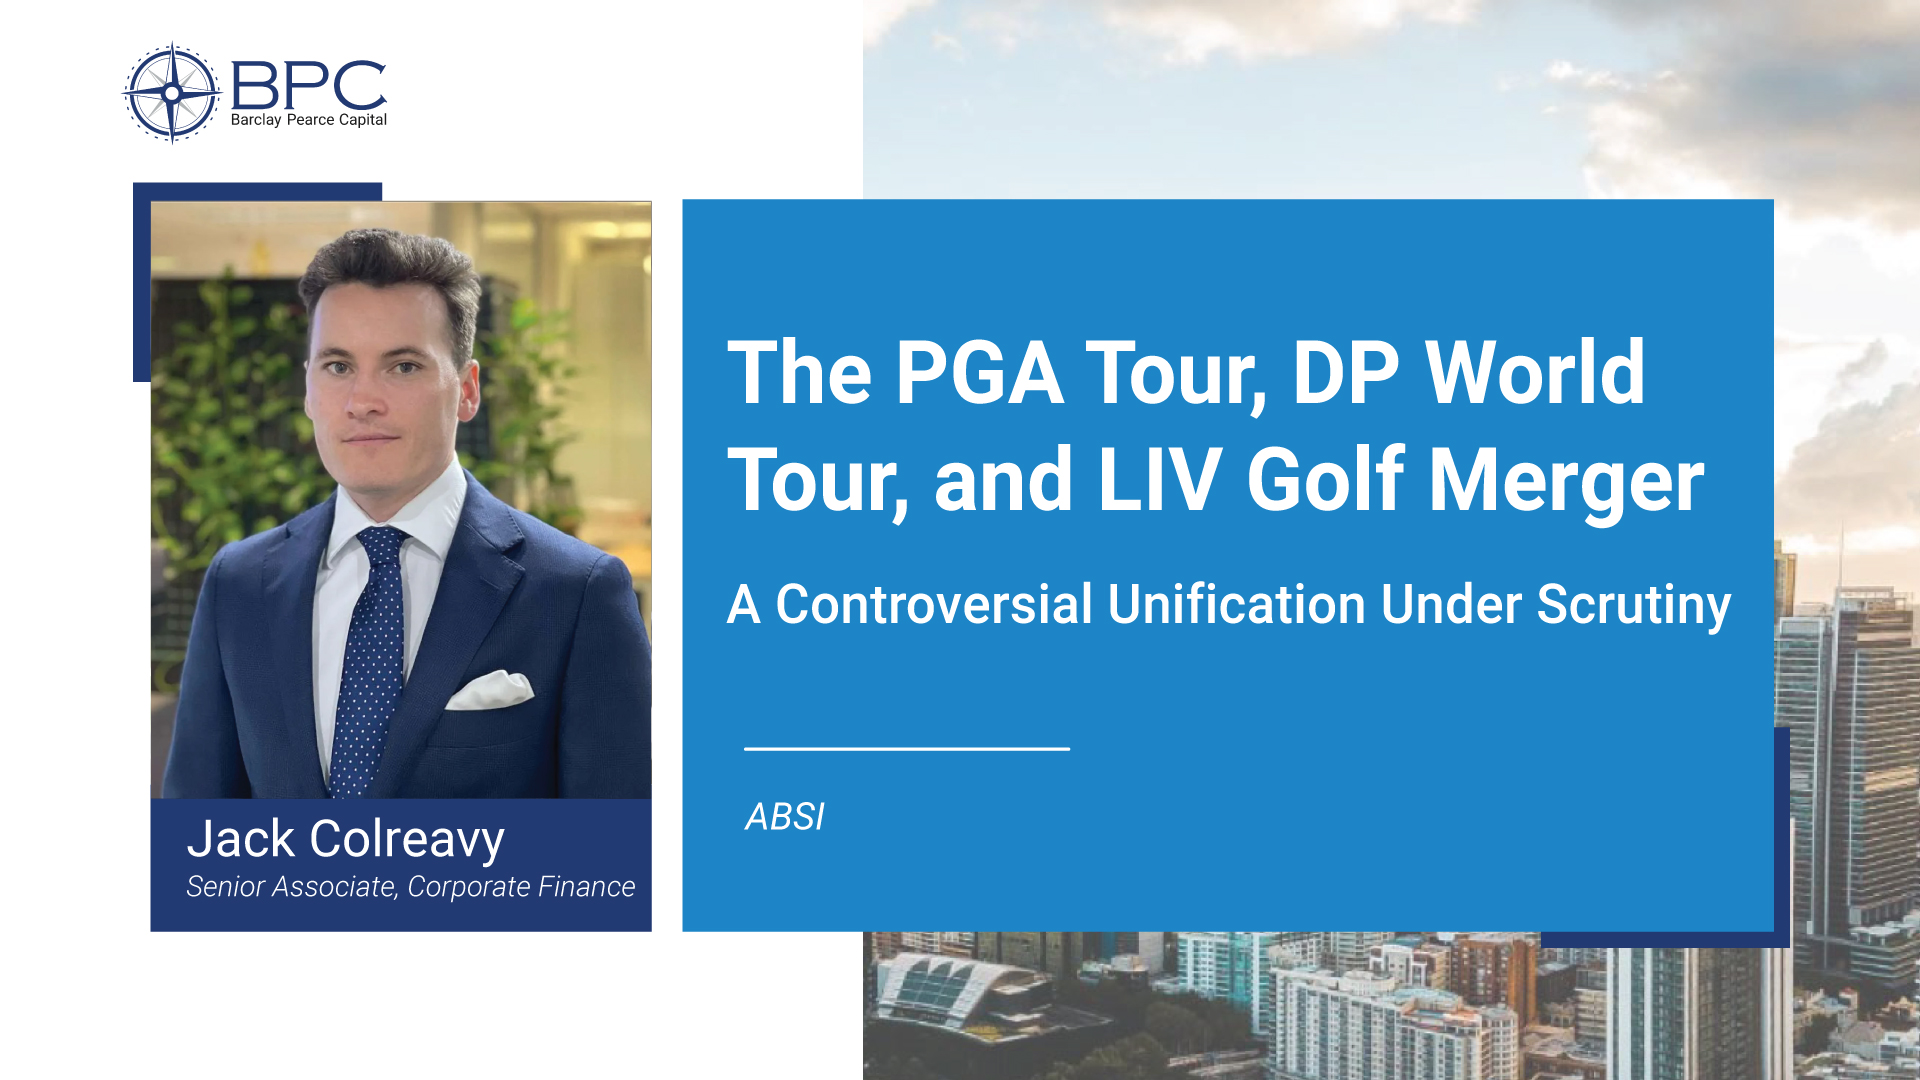 The merger of the PGA Tour, European Tour and LIV Golf unifies